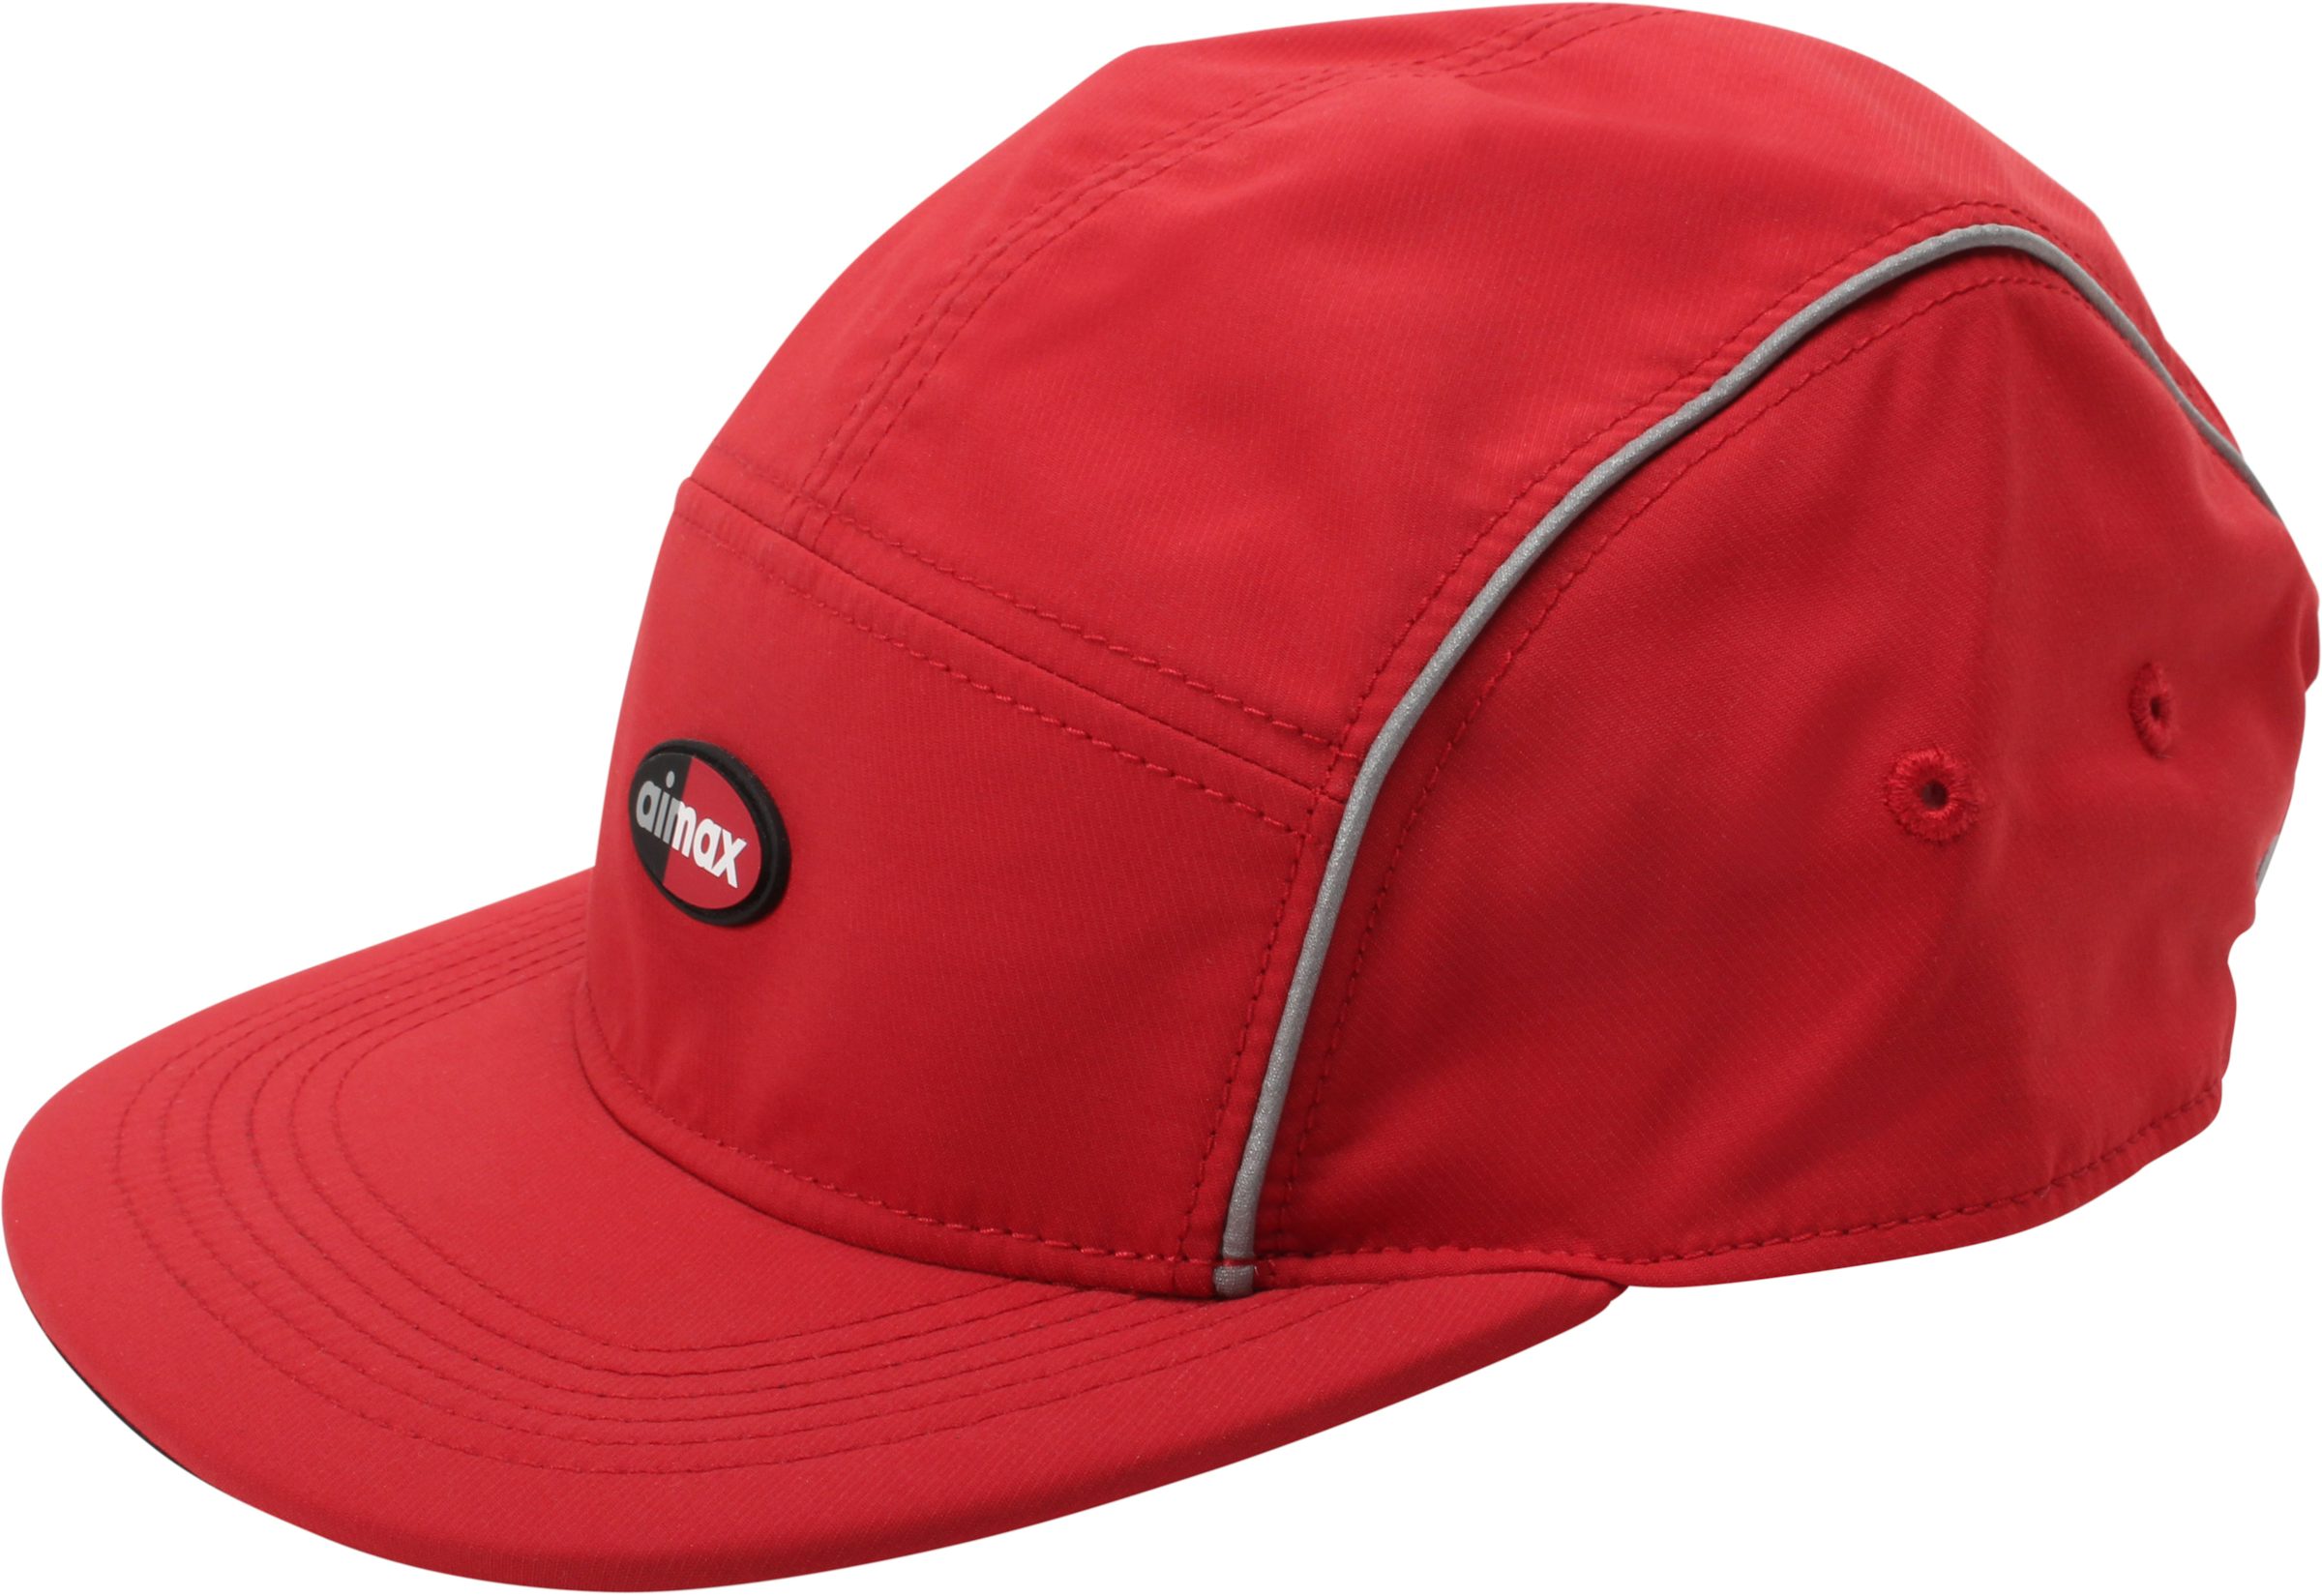 Supreme air jordan nike bape hat skateboard red supreme